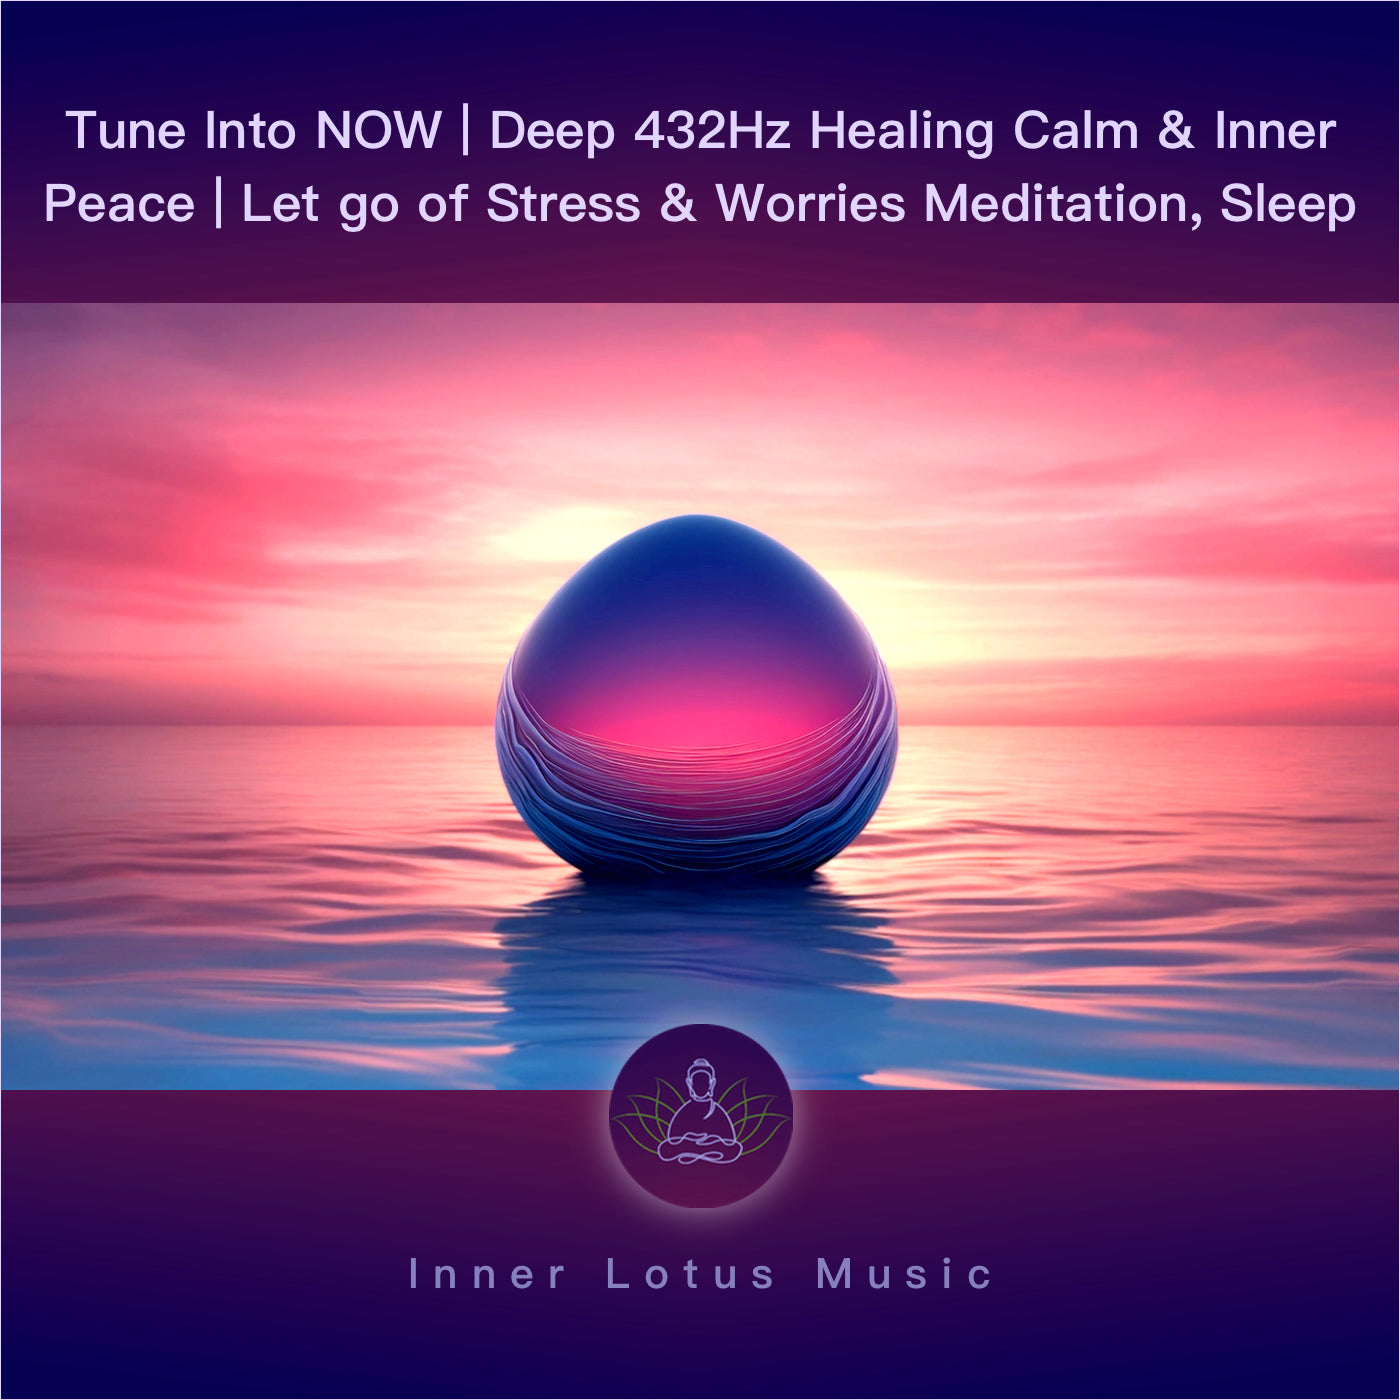 Tune Into NOW | Deep 432Hz Healing Calm & Inner Peace | Let go of Stress & Worries Meditation, Sleep